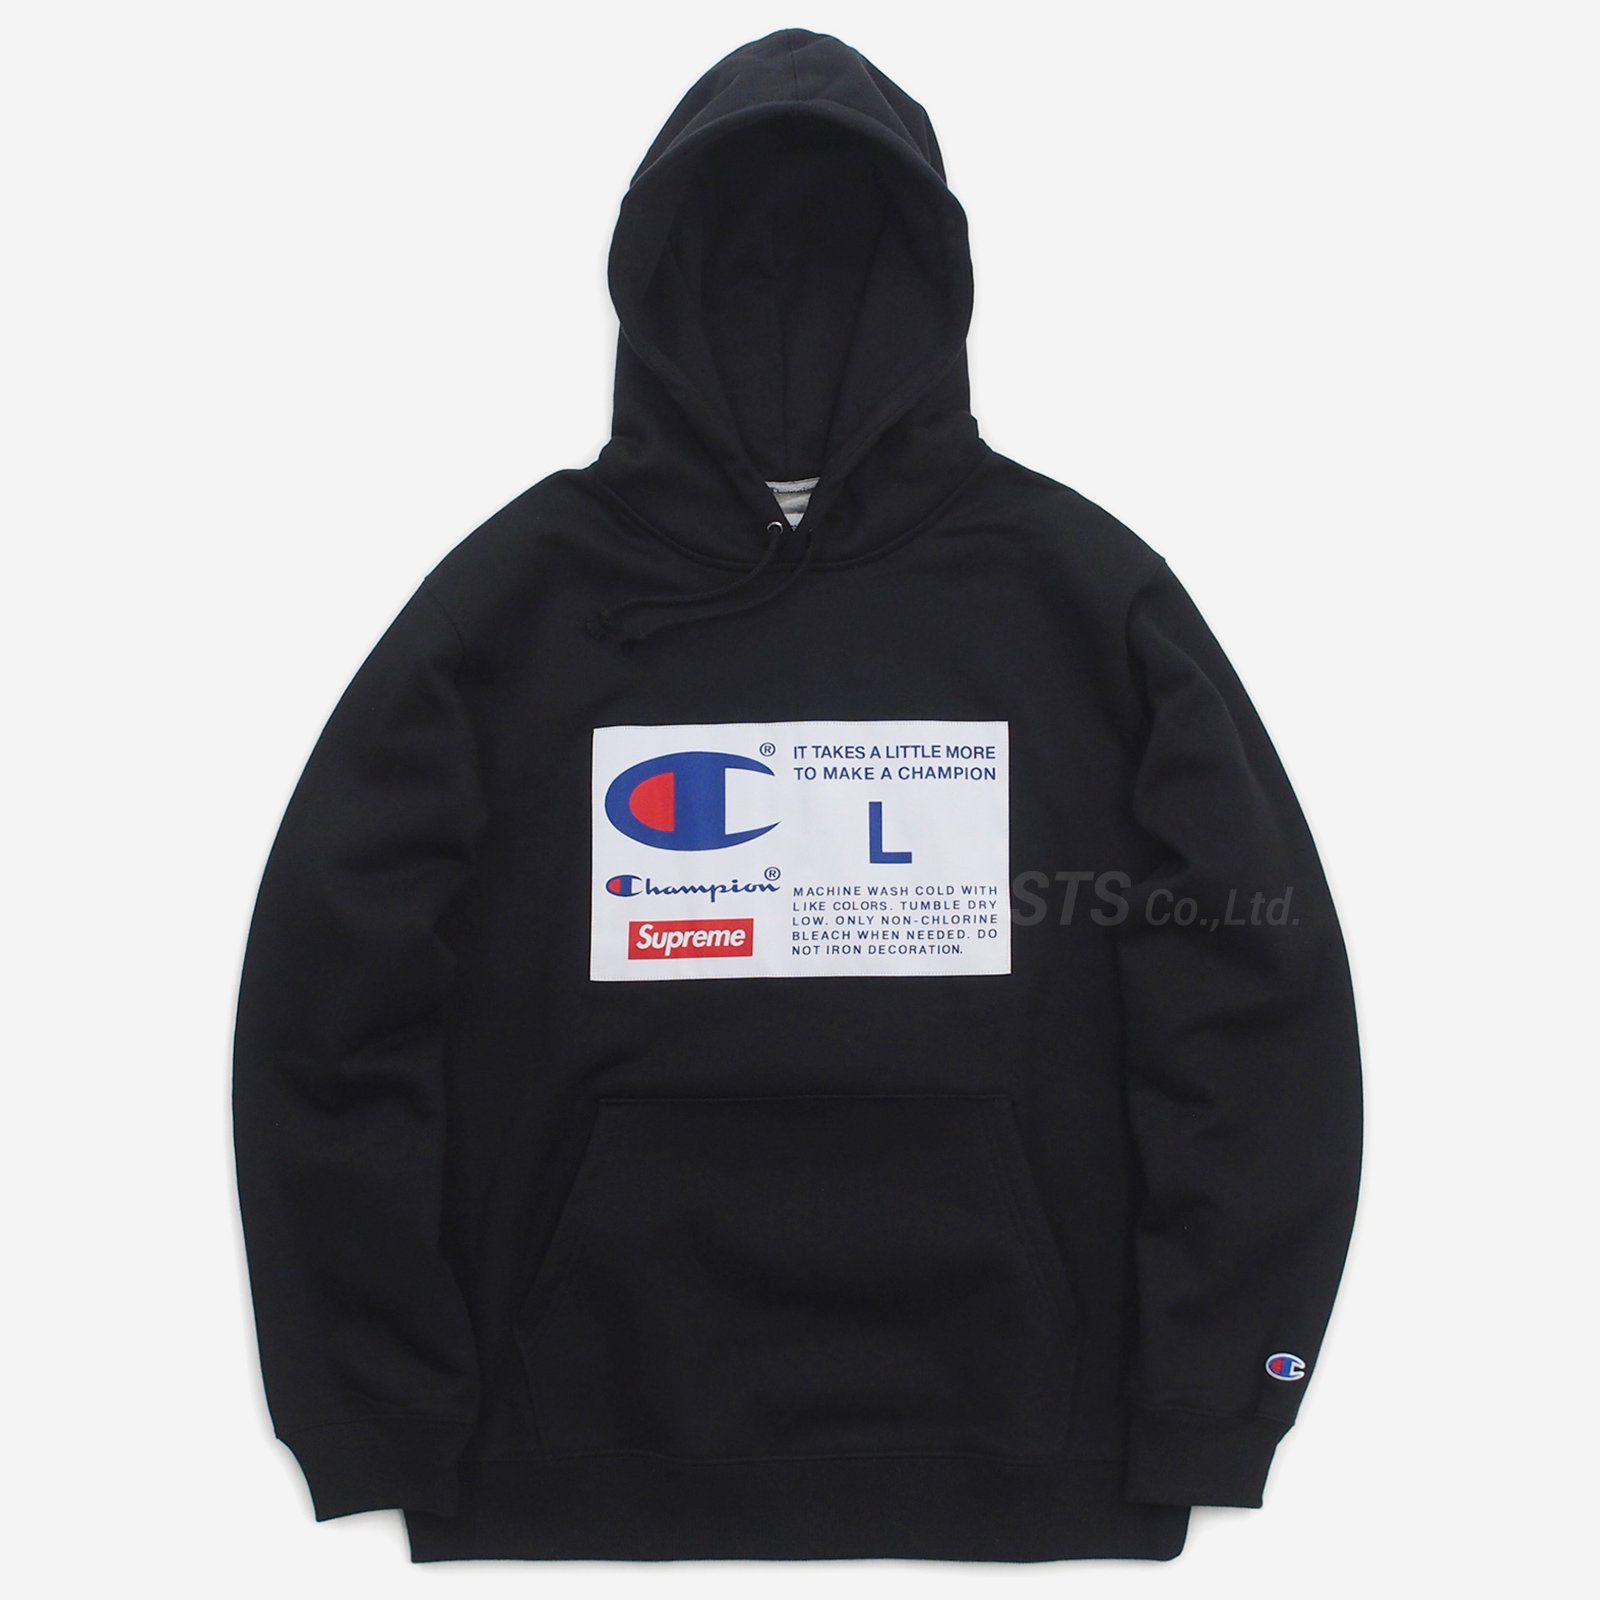 Supreme/Champion Label Hooded Sweatshirt - ParkSIDER